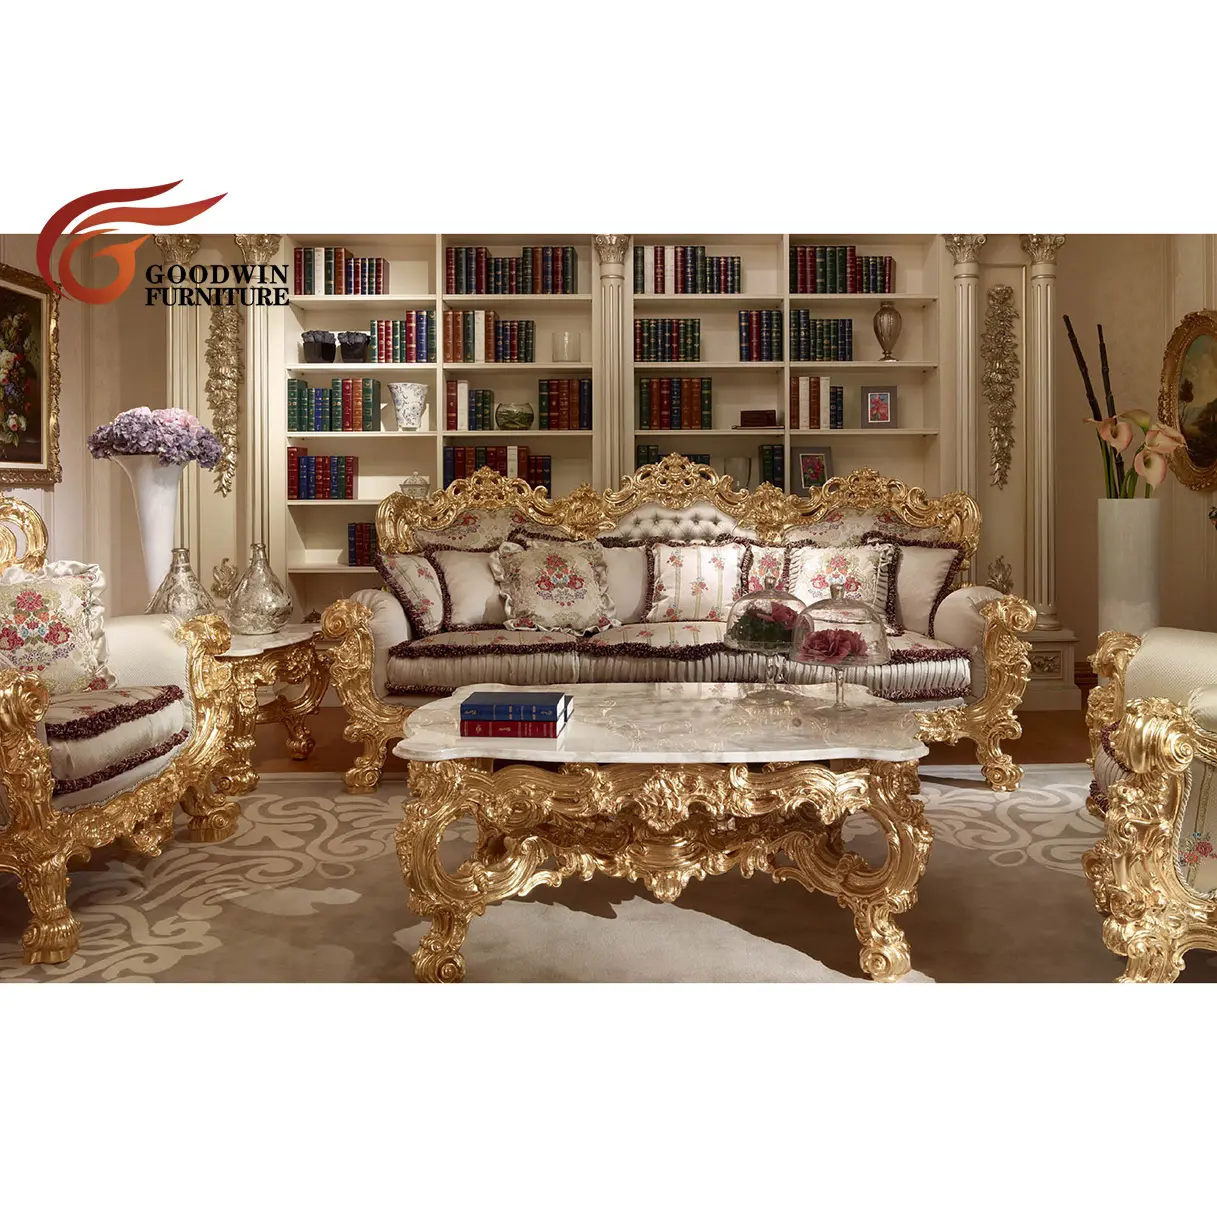 Goodwin royal conjunto de sofá de madeira, moderno, madeira dourada, para sala de estar, móveis to02s